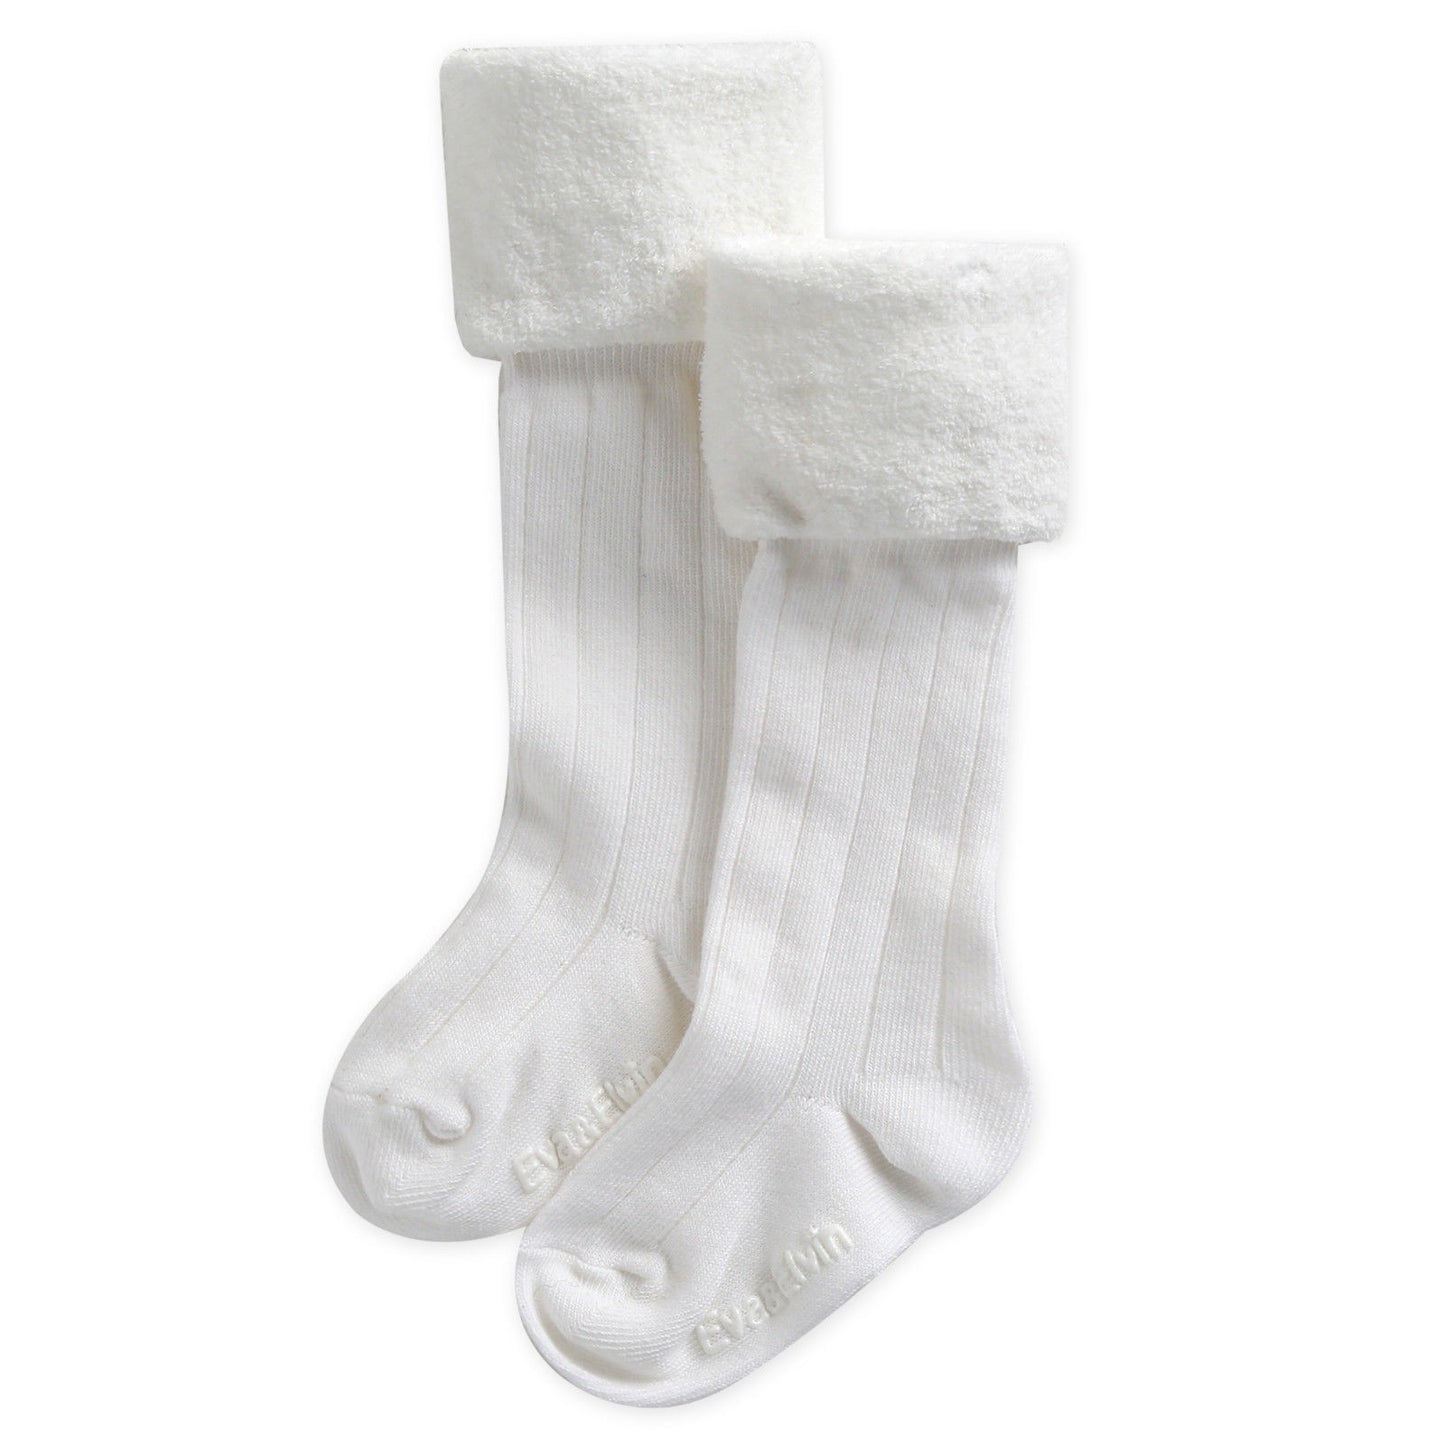 Toddler girls' faux fur cuff ivory knee socks